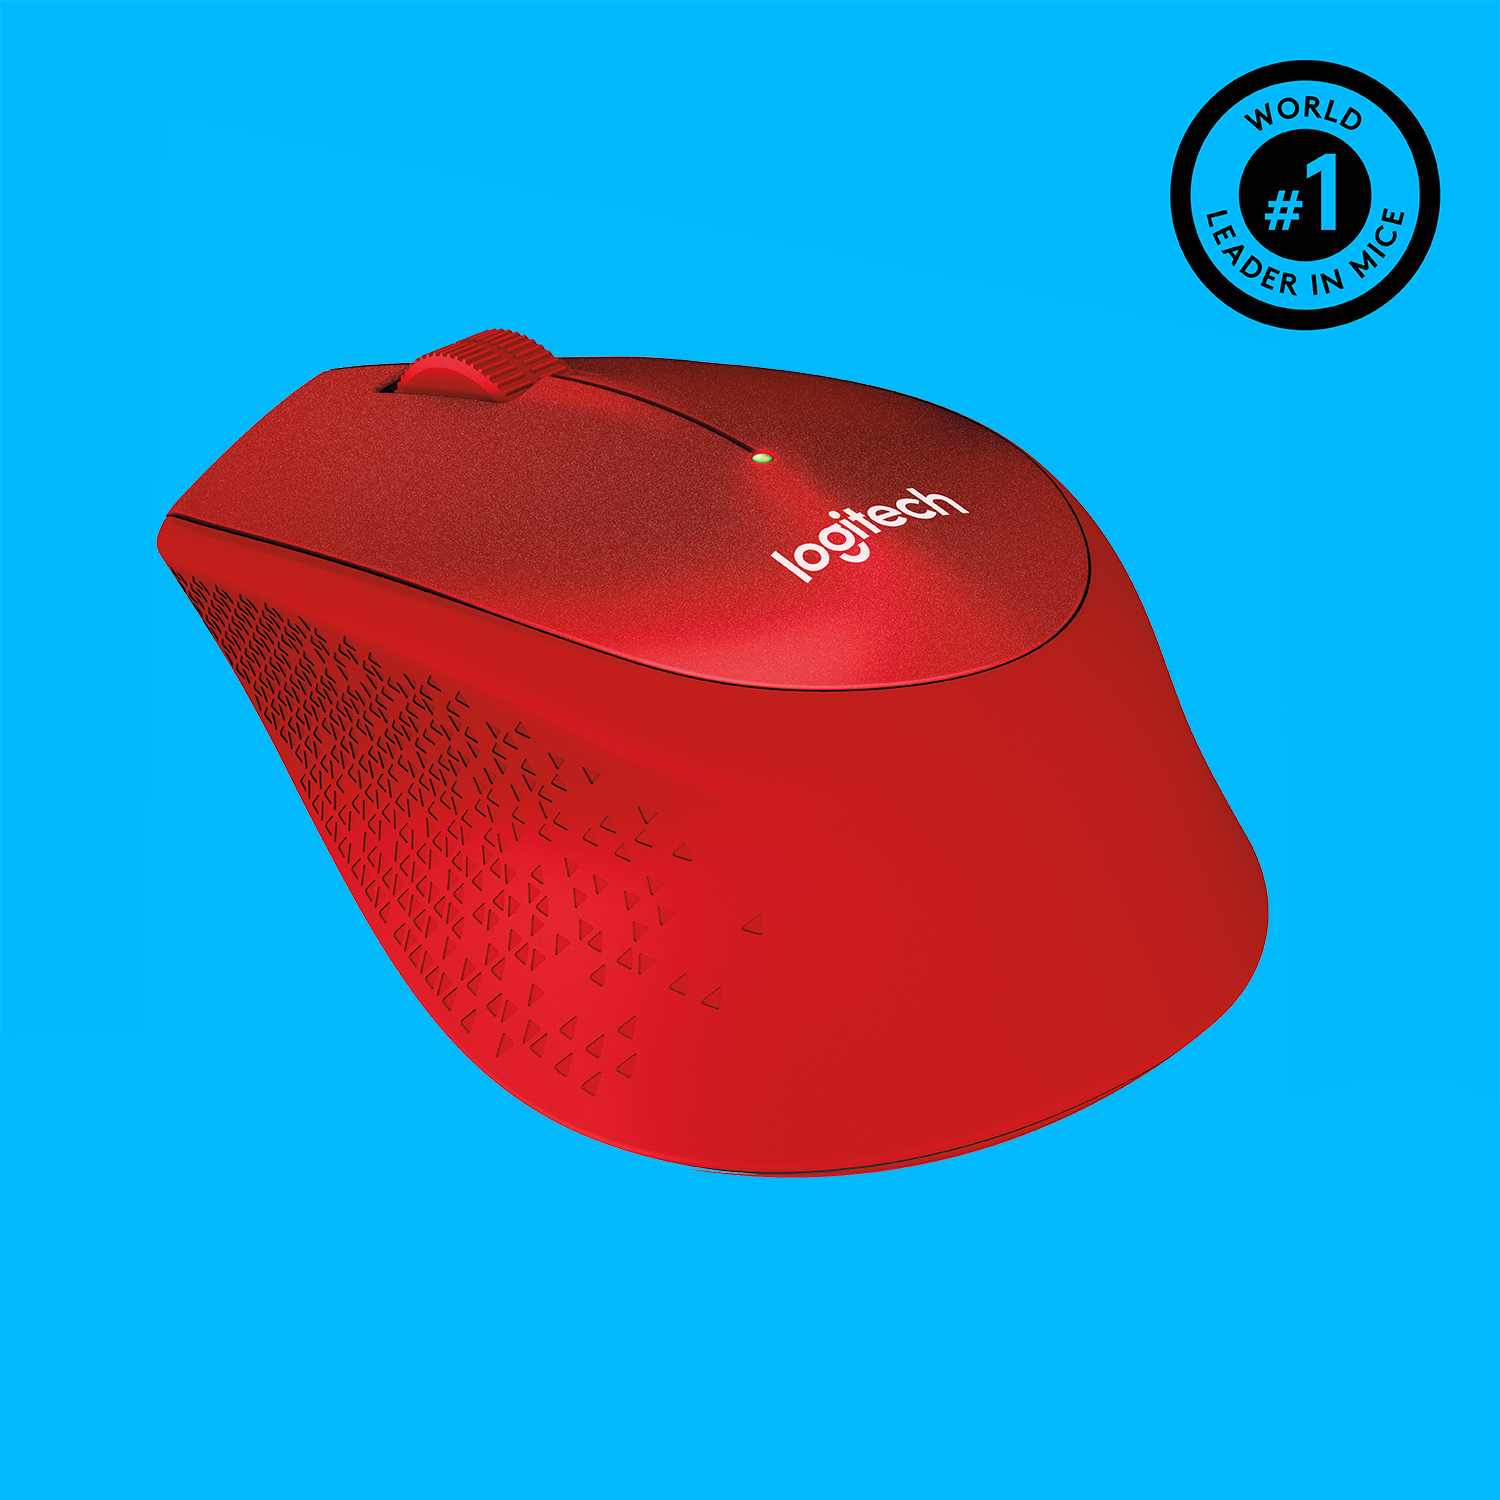 Logitech M330 Silent Plus Wireless Mouse Universal